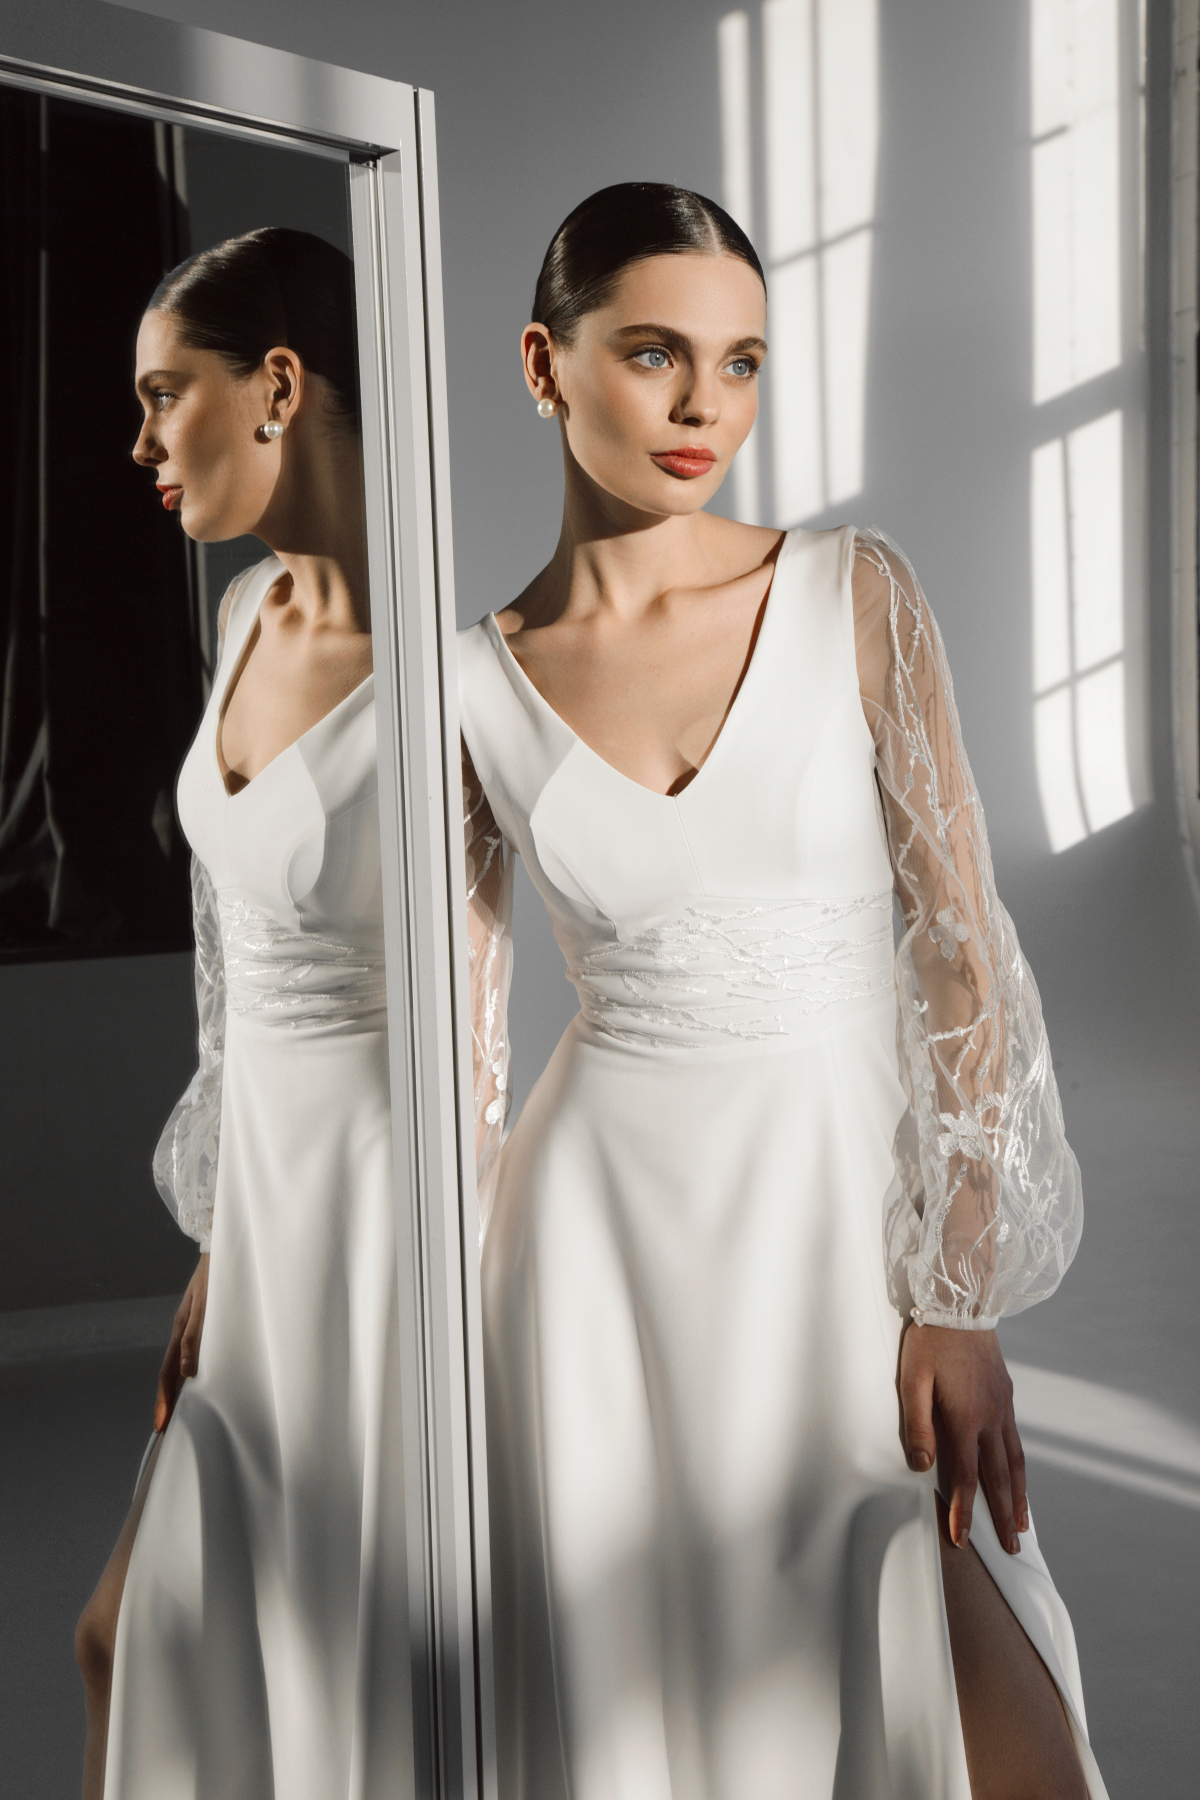 Boho wedding dress with sleeves - Wendy • Piondress